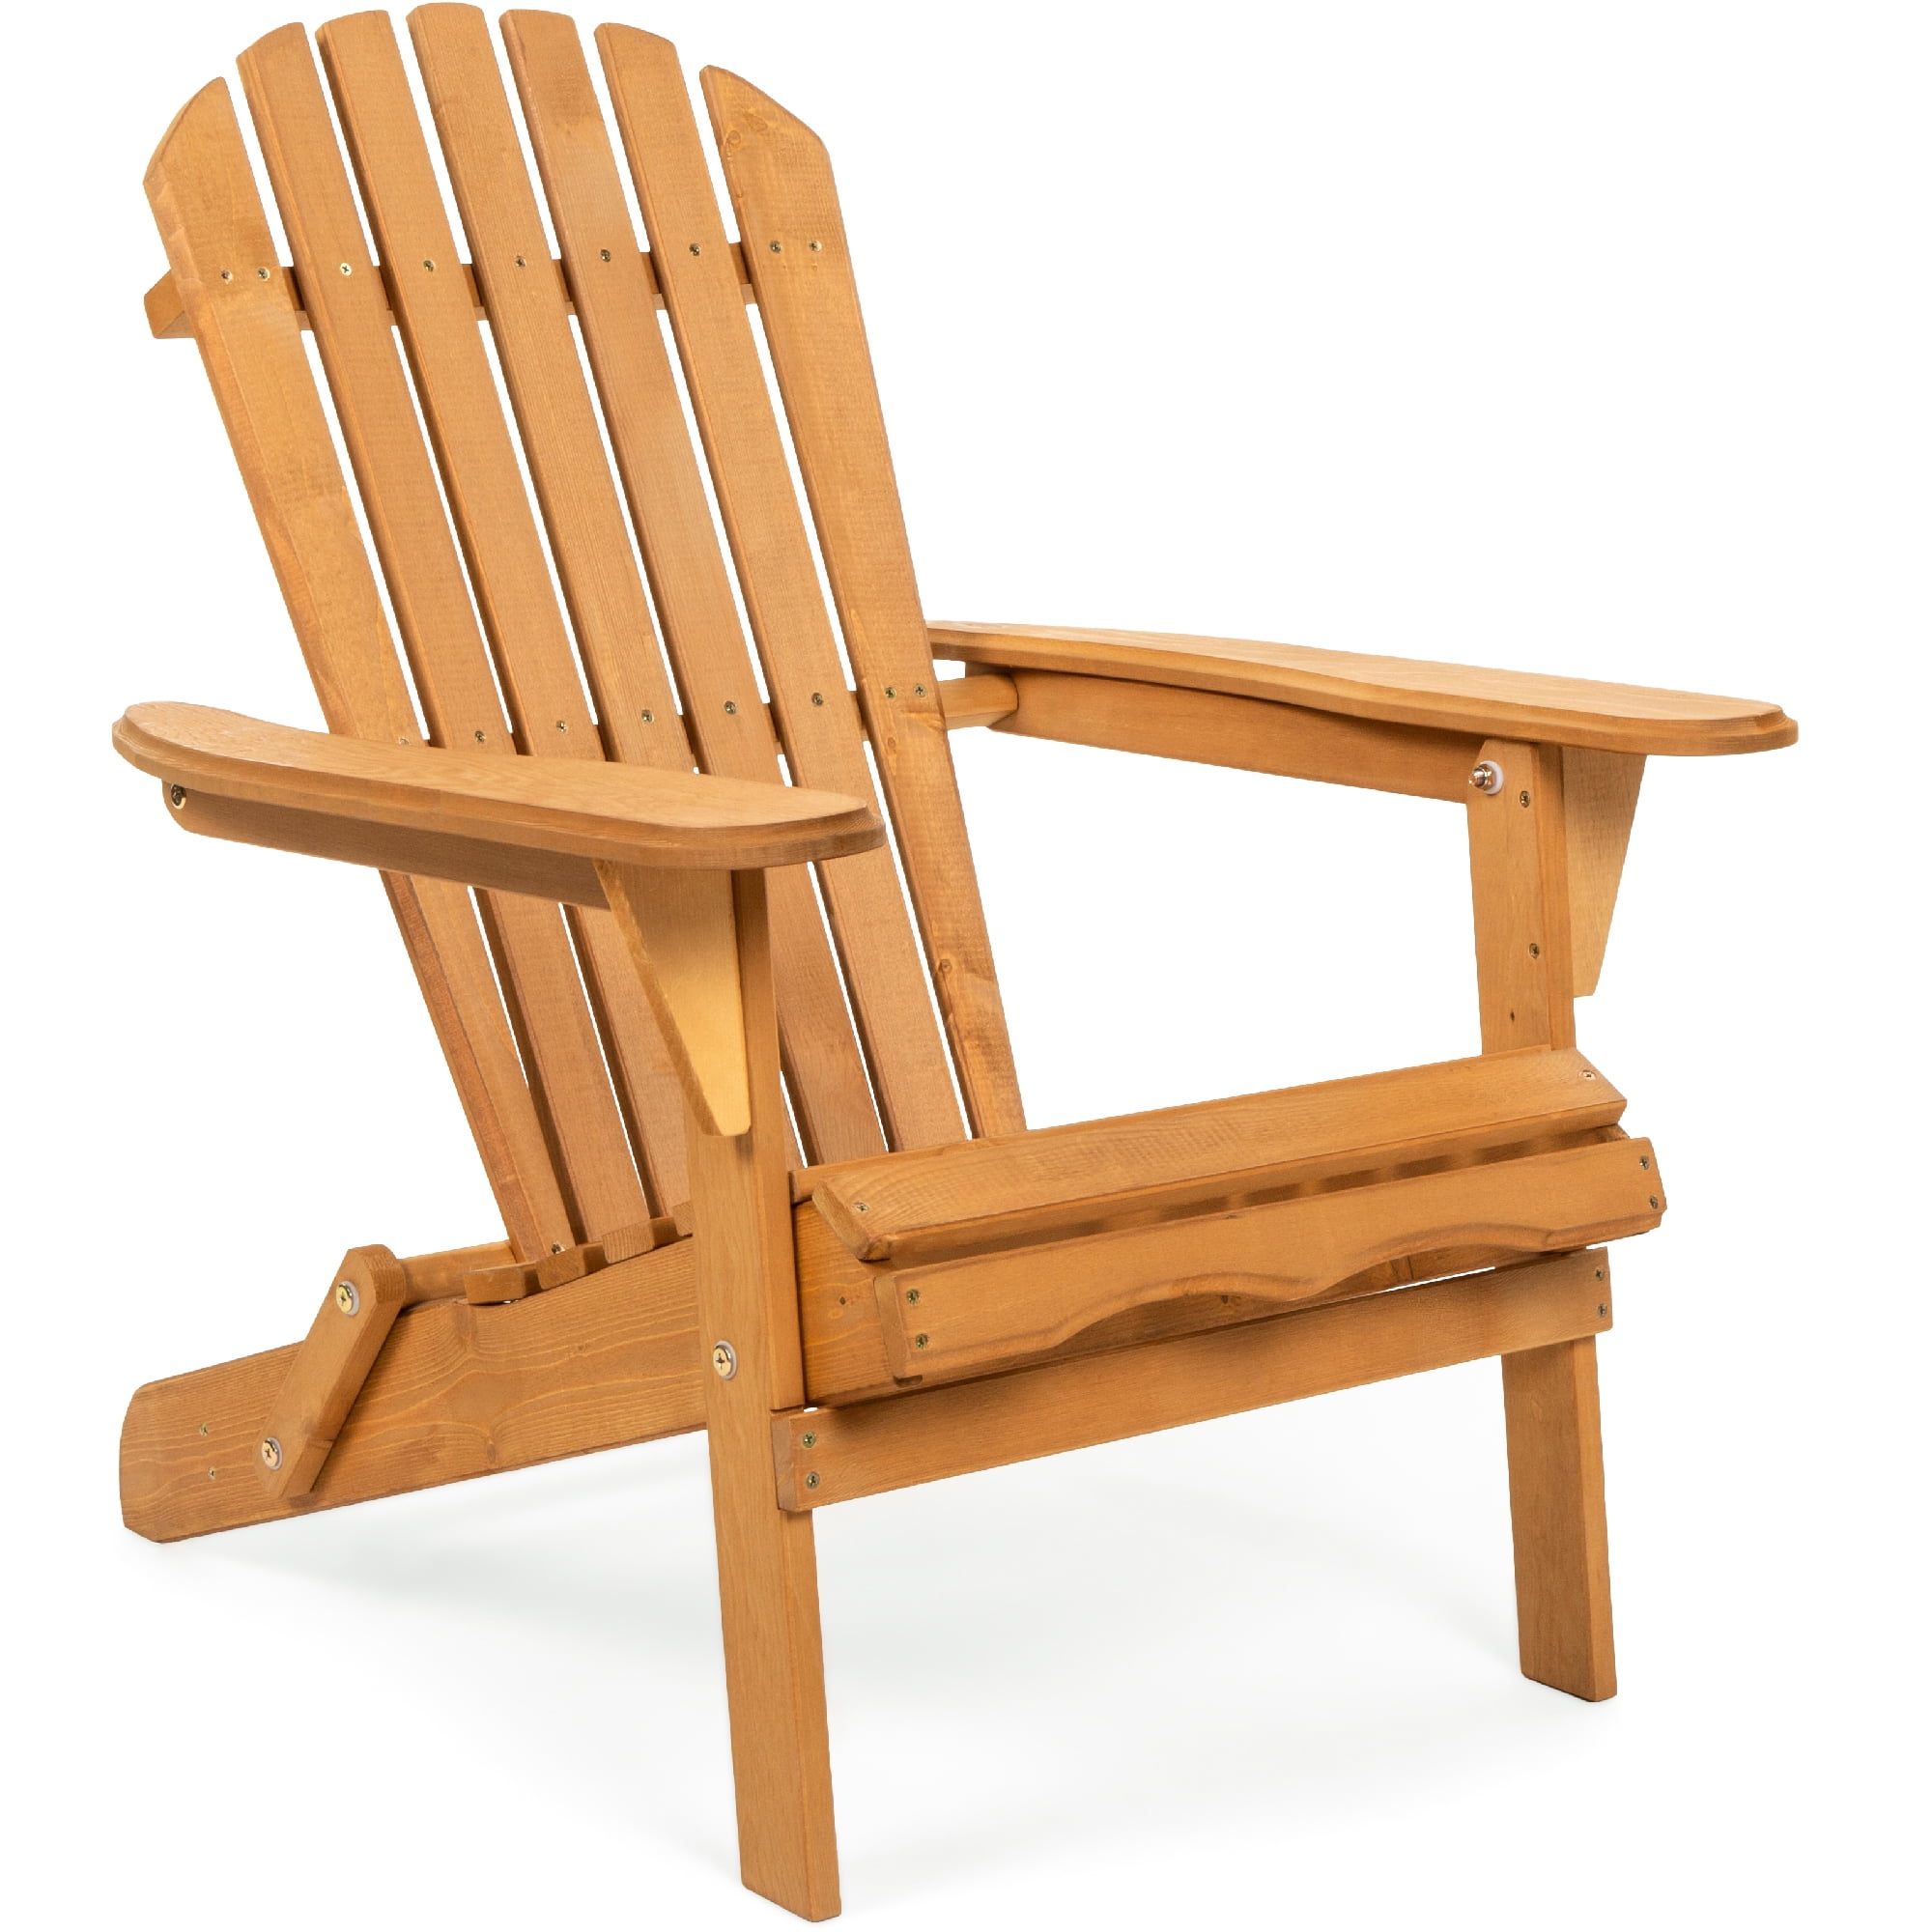 Keter Adirondack Chair Seat Indoor Outdoor Seating Furniture Garden Teal Resin 